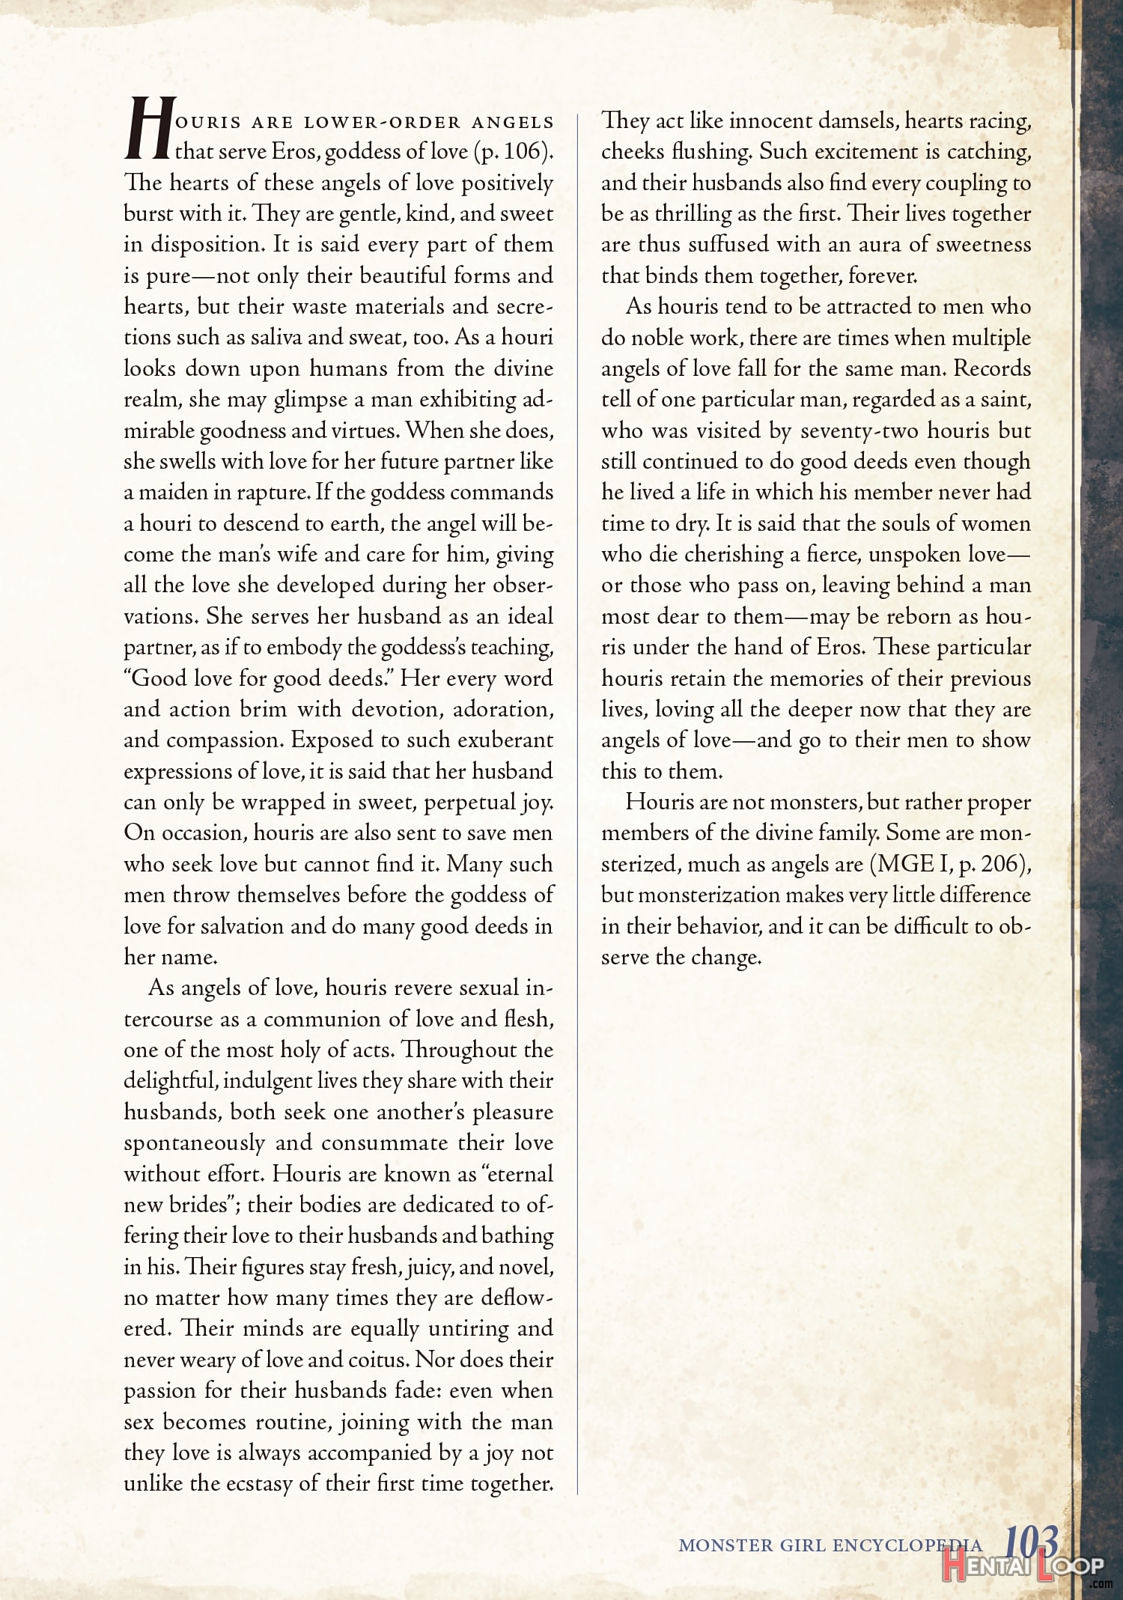 Monster Girl Encyclopedia Vol. 2 page 104